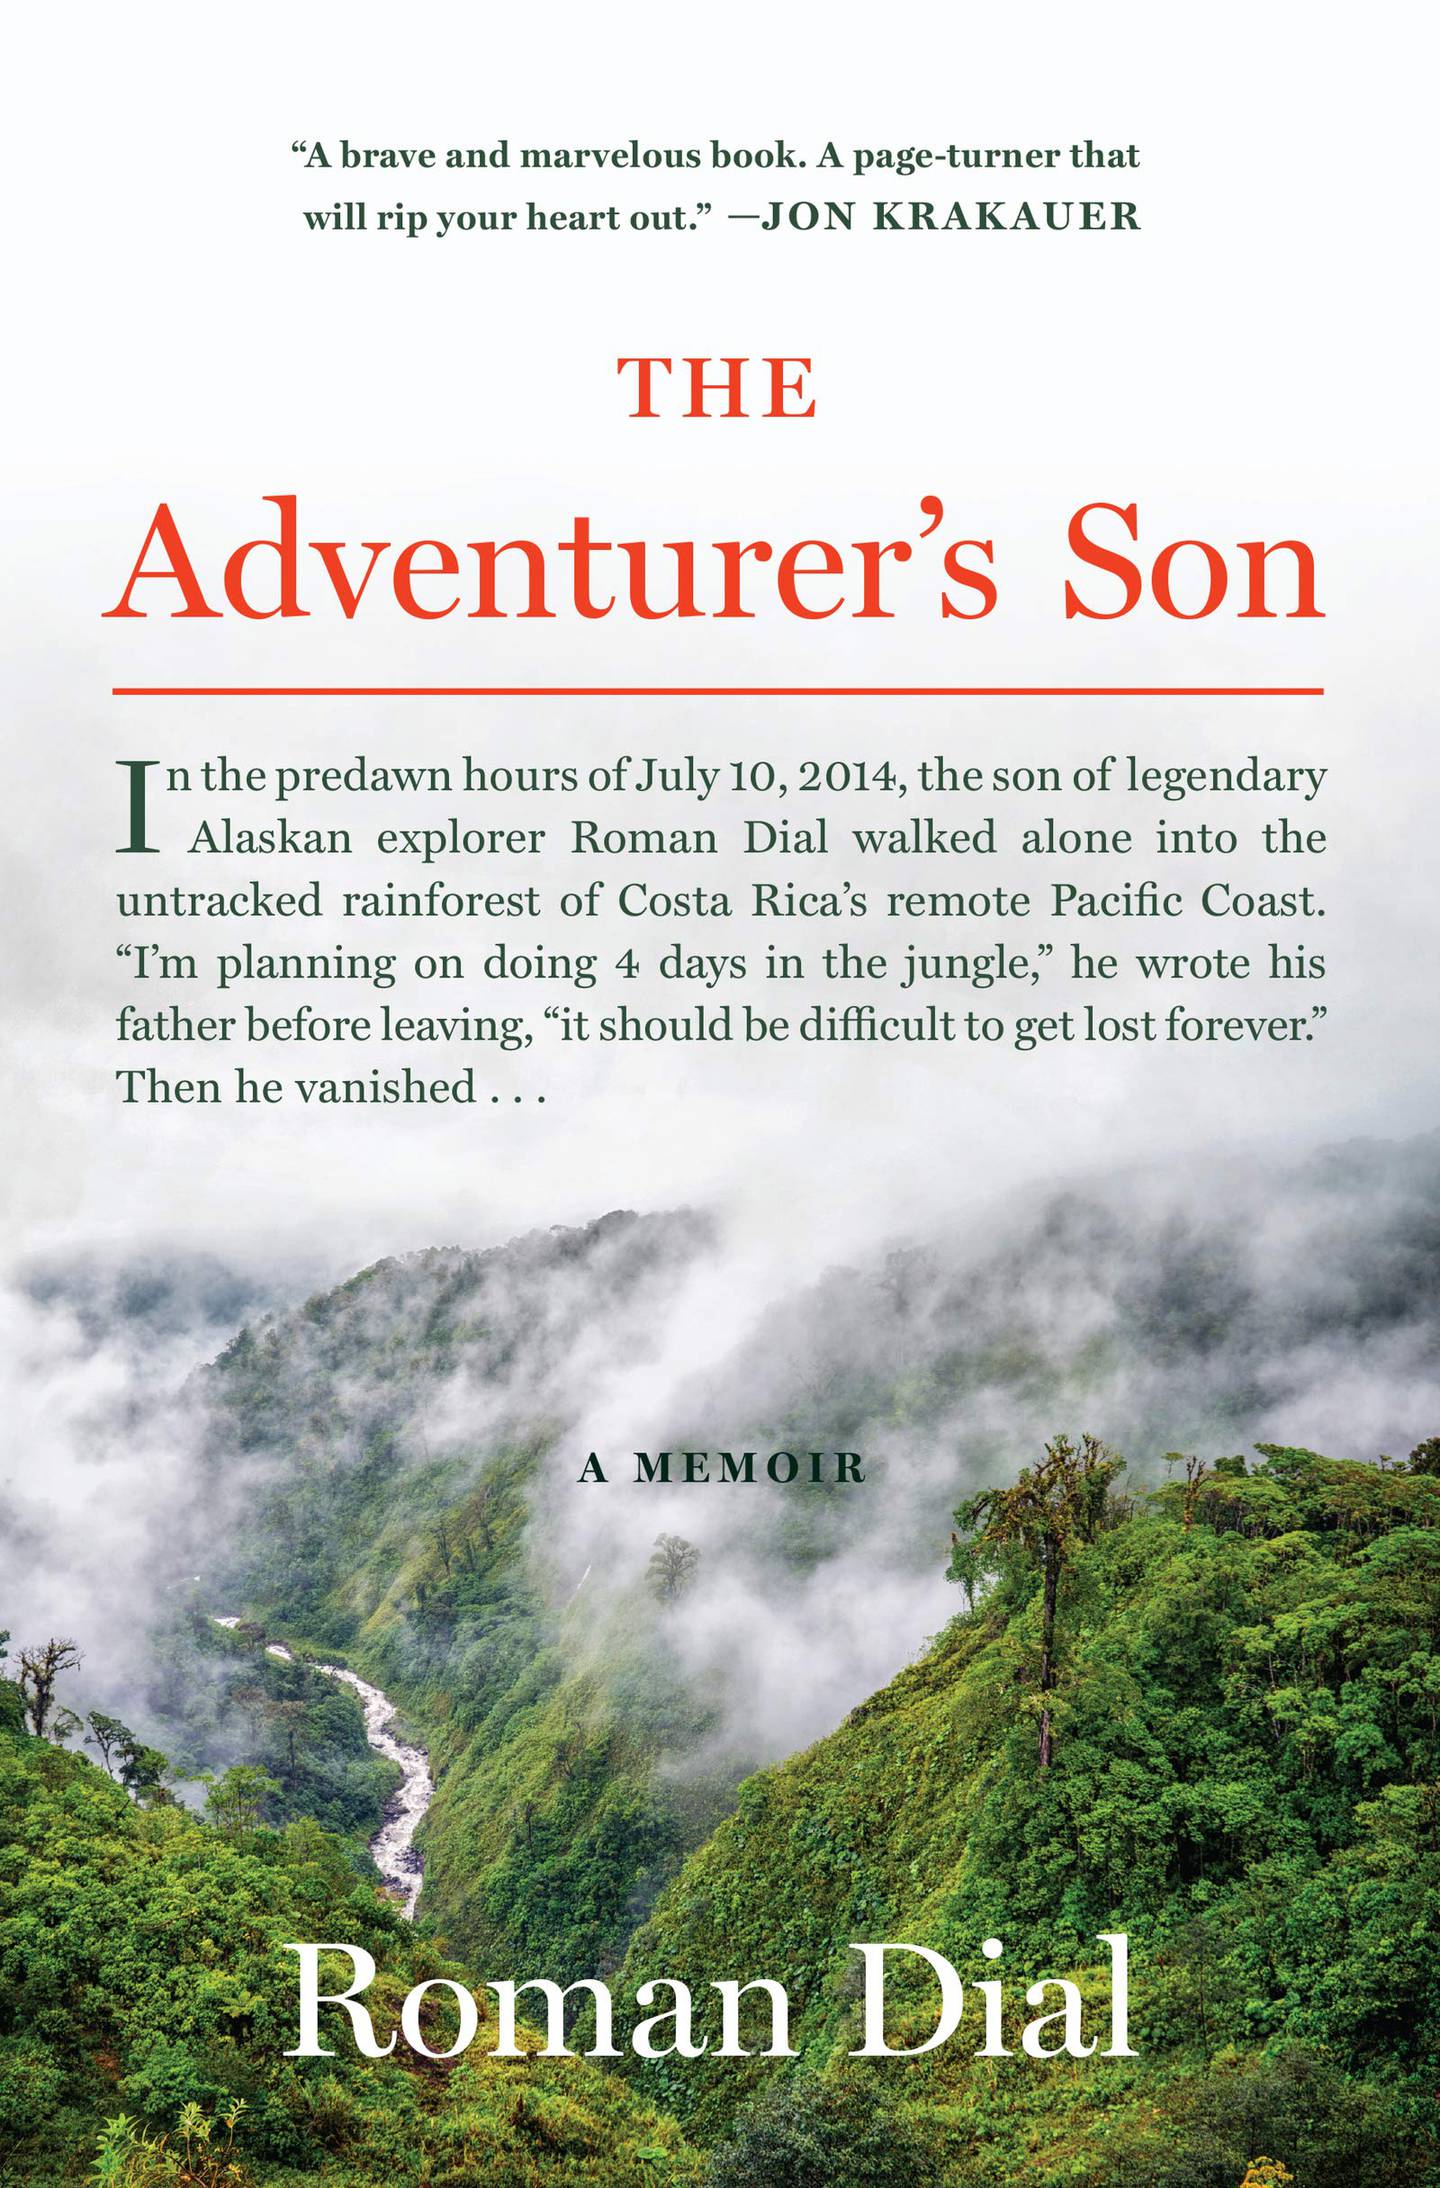 "The Adventurer’s Son: A Memoir," by Roman Dial